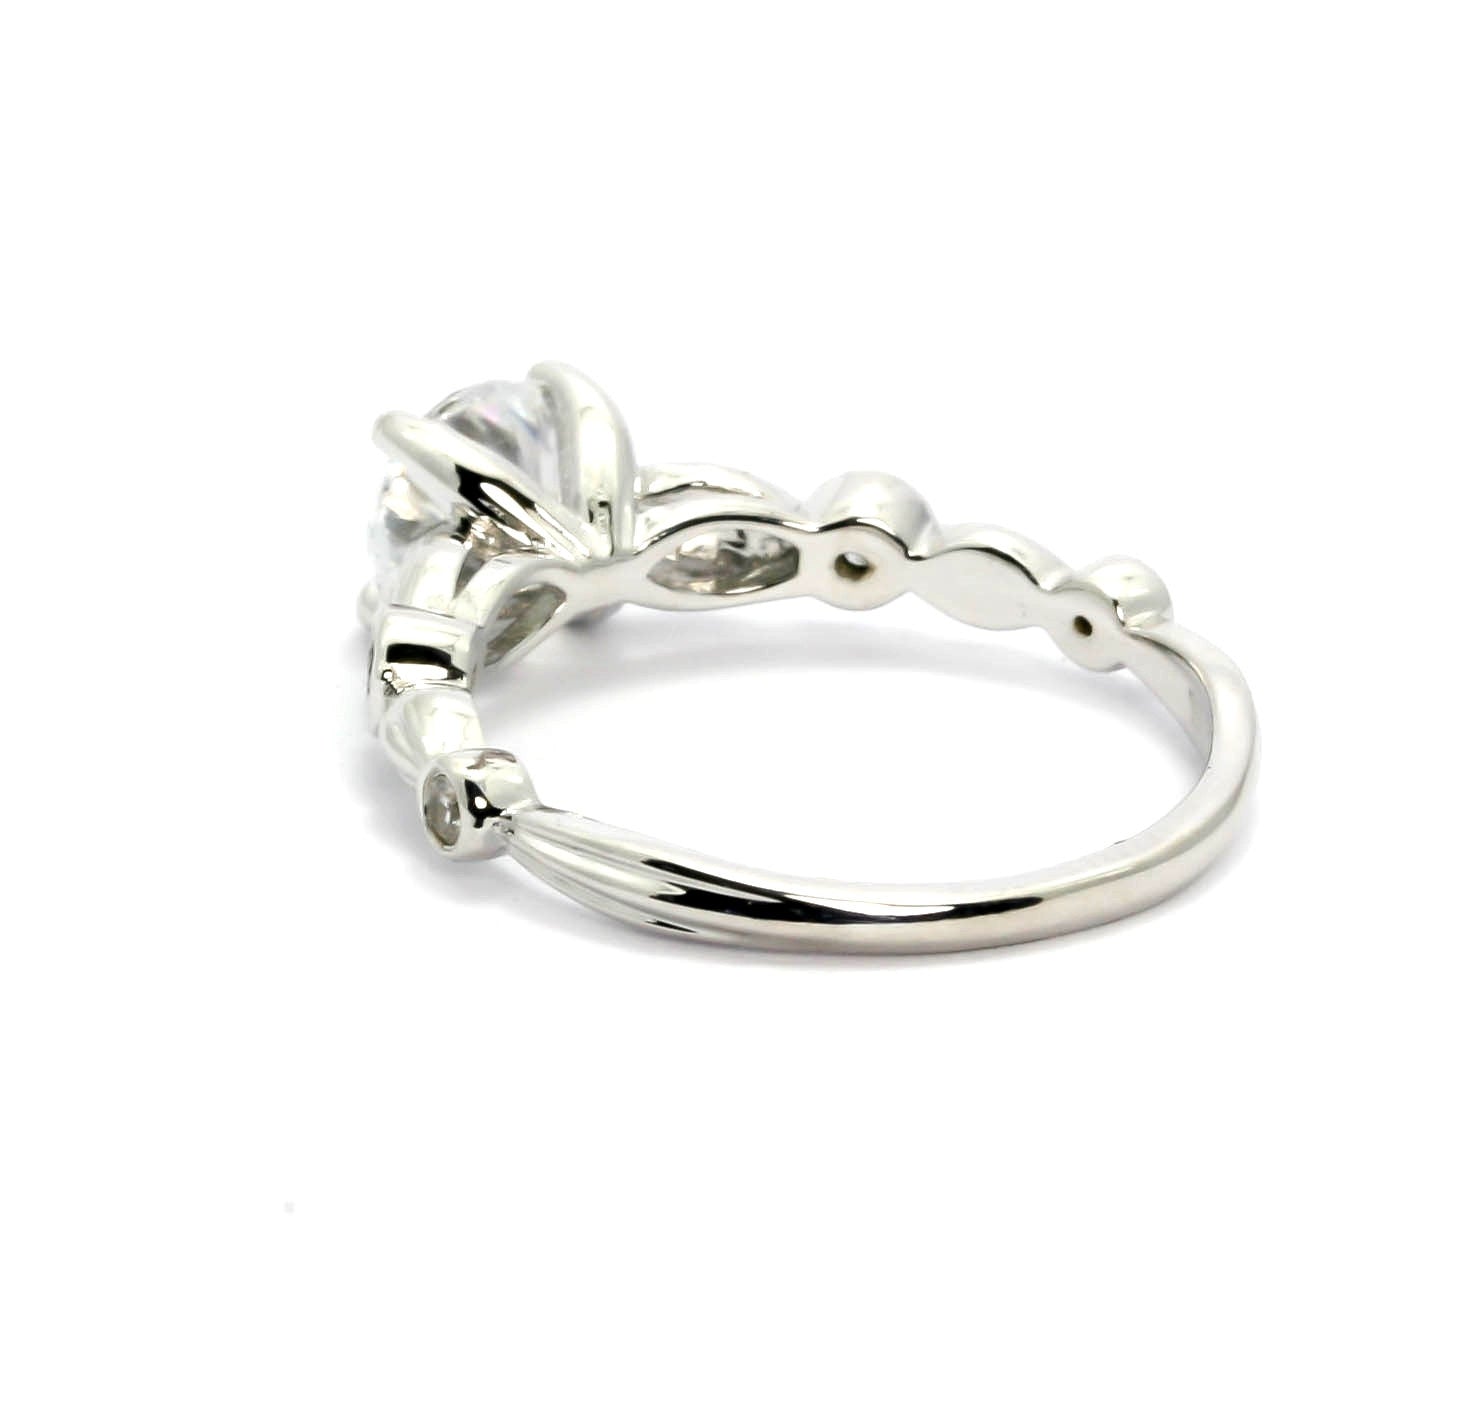 Diamond Engagement Ring, Unique Solitaire 1 Carat Diamond Center Stone & .13 Carat Diamonds Accent Stones, Anniversary Ring - WDY11670SE